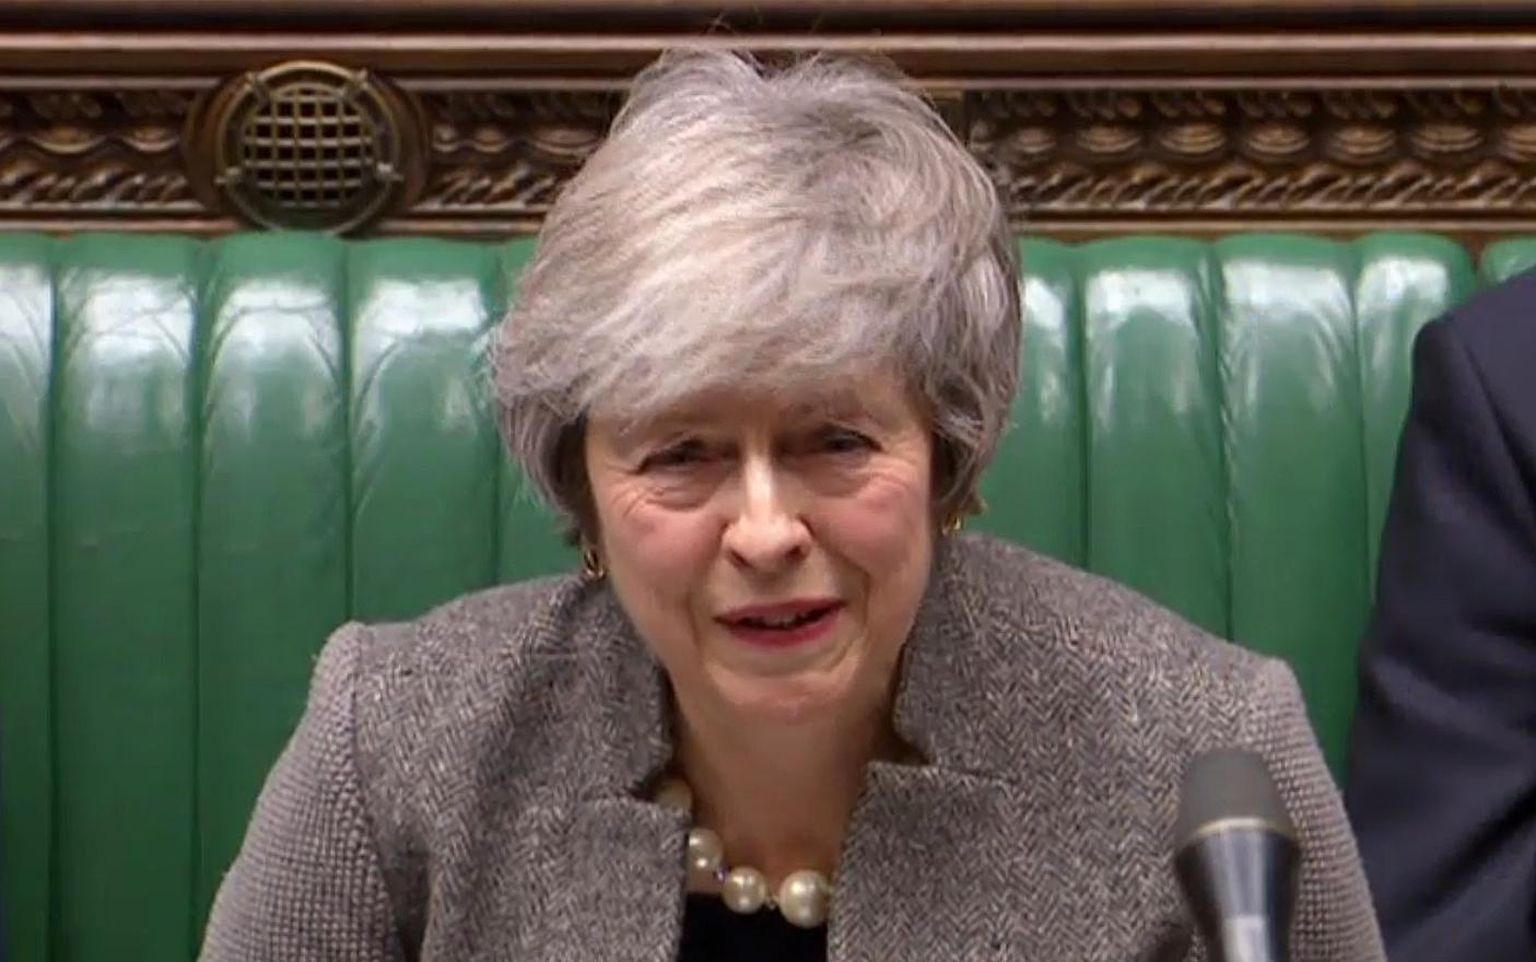 Briti peaminister Theresa May parlamendi alamkojas.